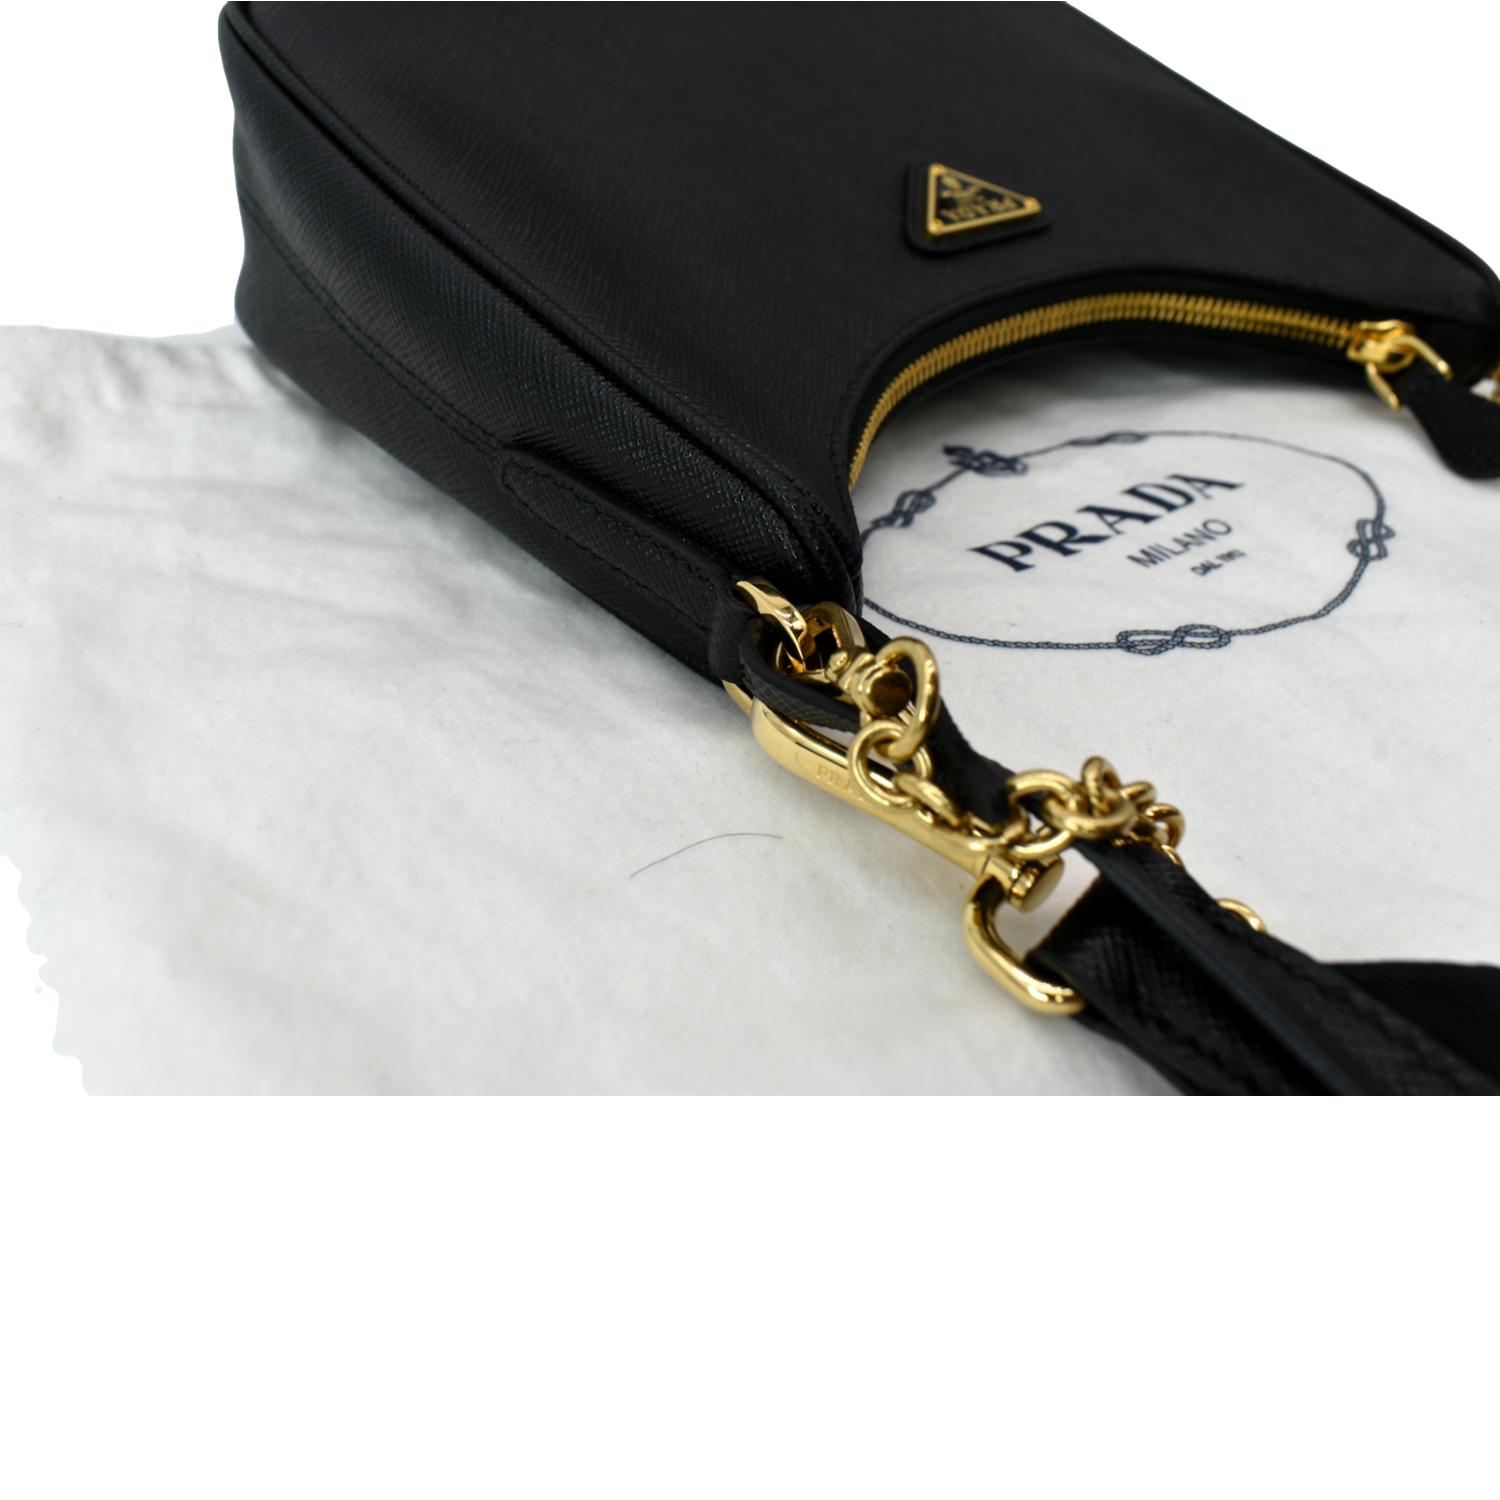 Prada Re-Edition 2005 black Saffiano leather bag